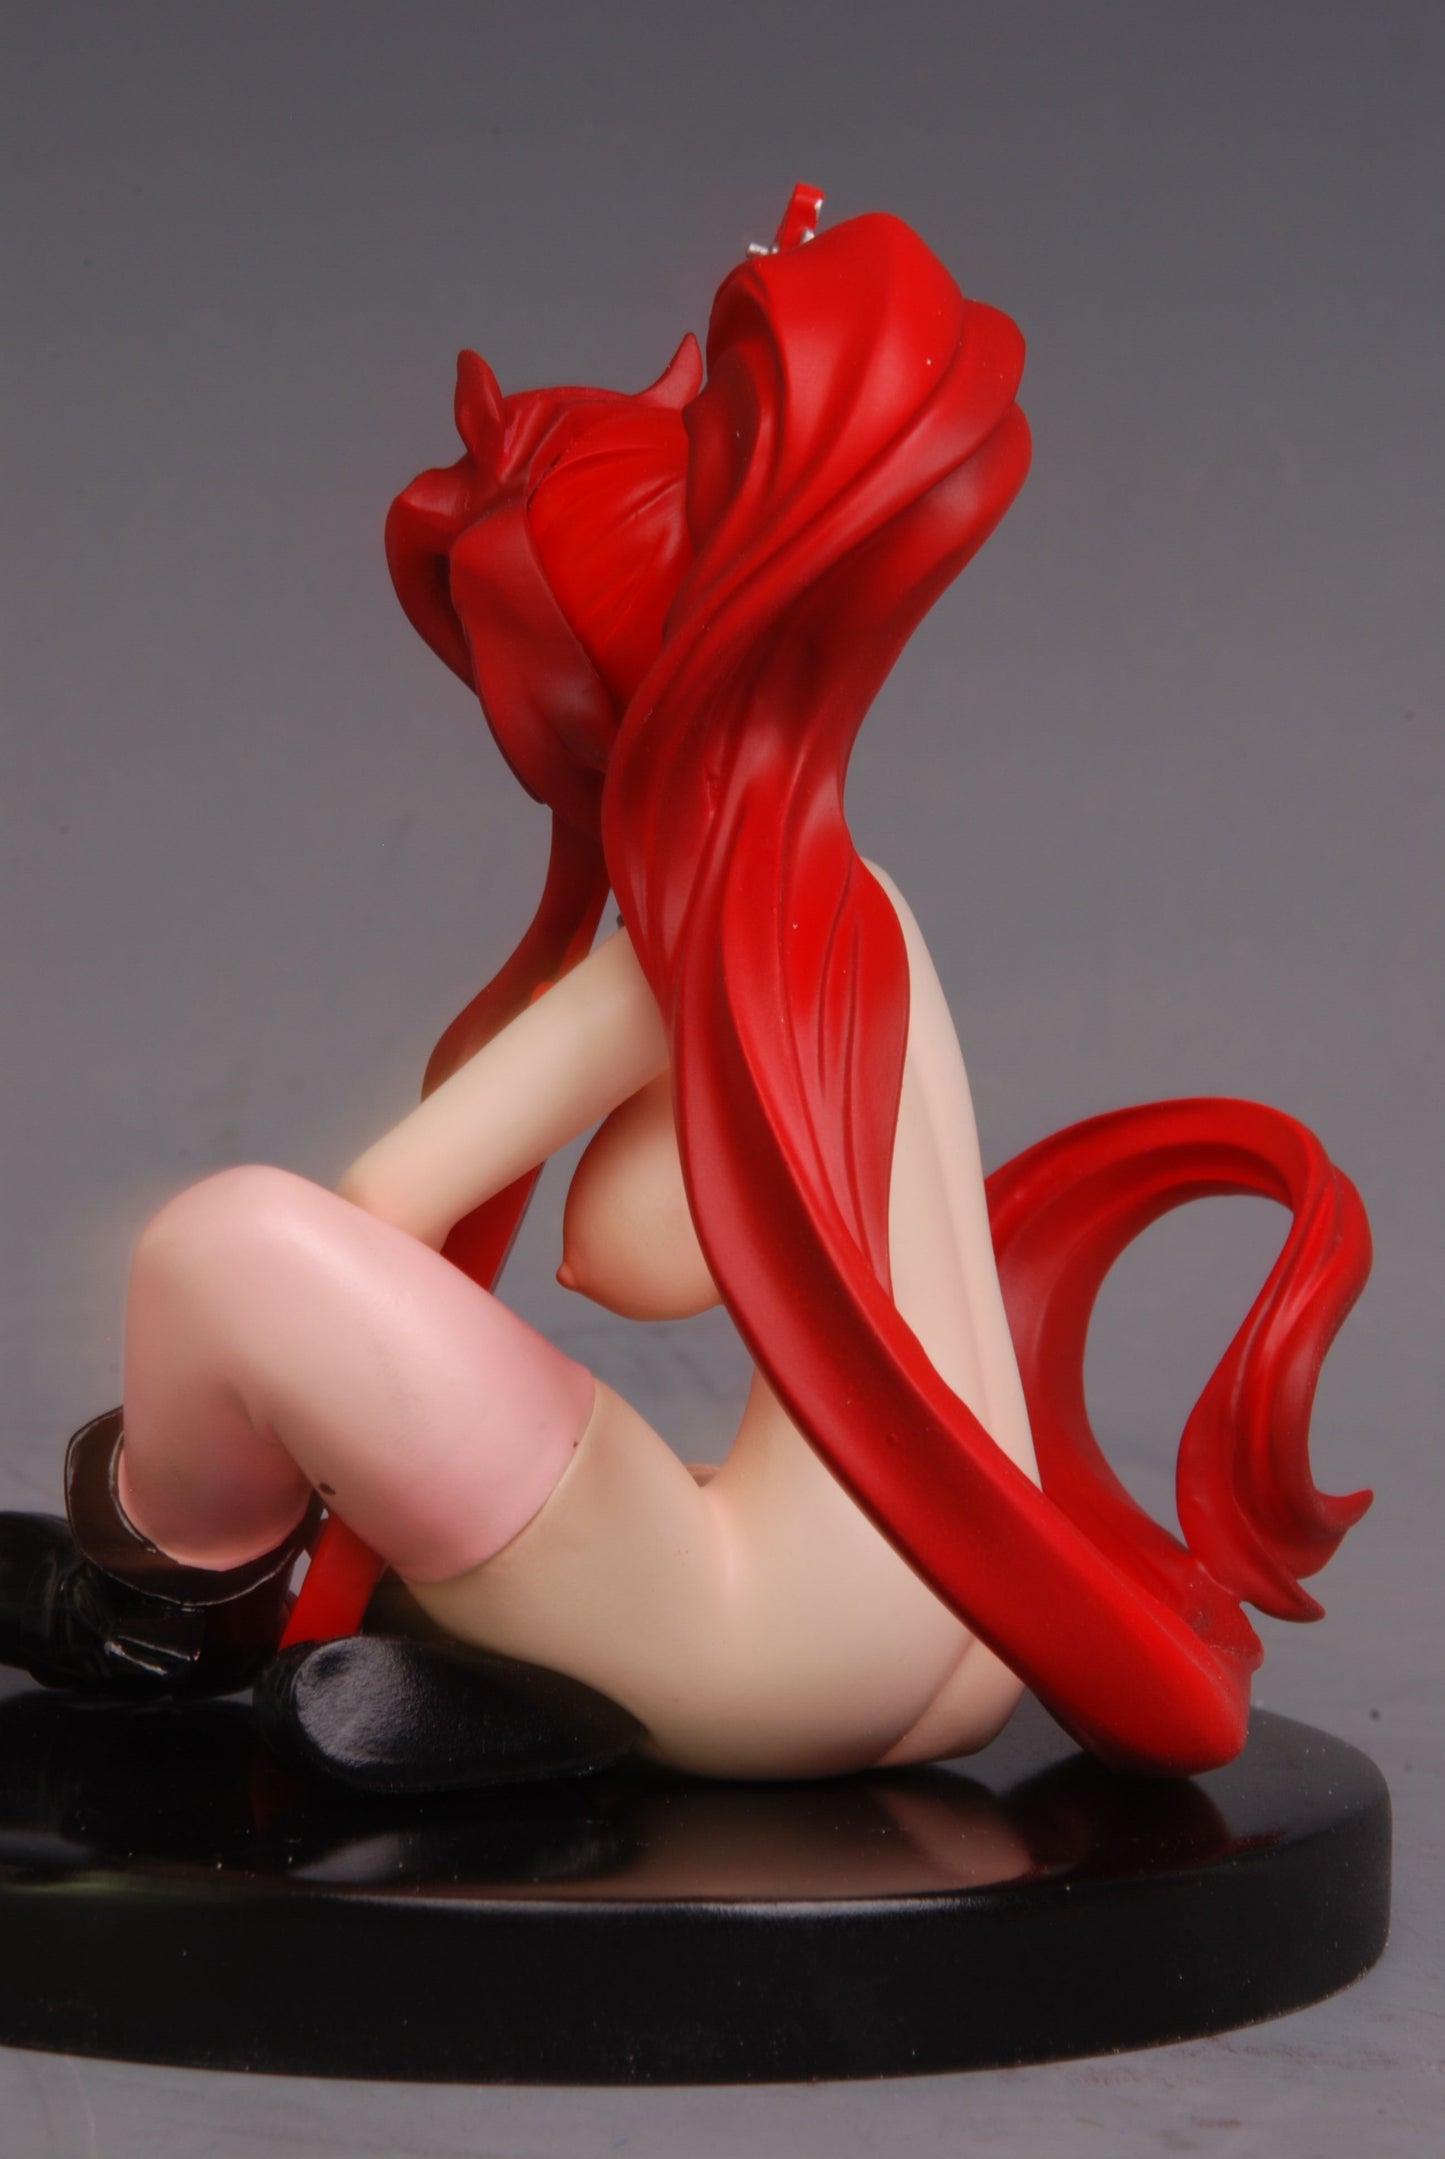 Tengen Toppa Gurren Lagann yoko 1/6 naked anime figure sexy anime girl figure